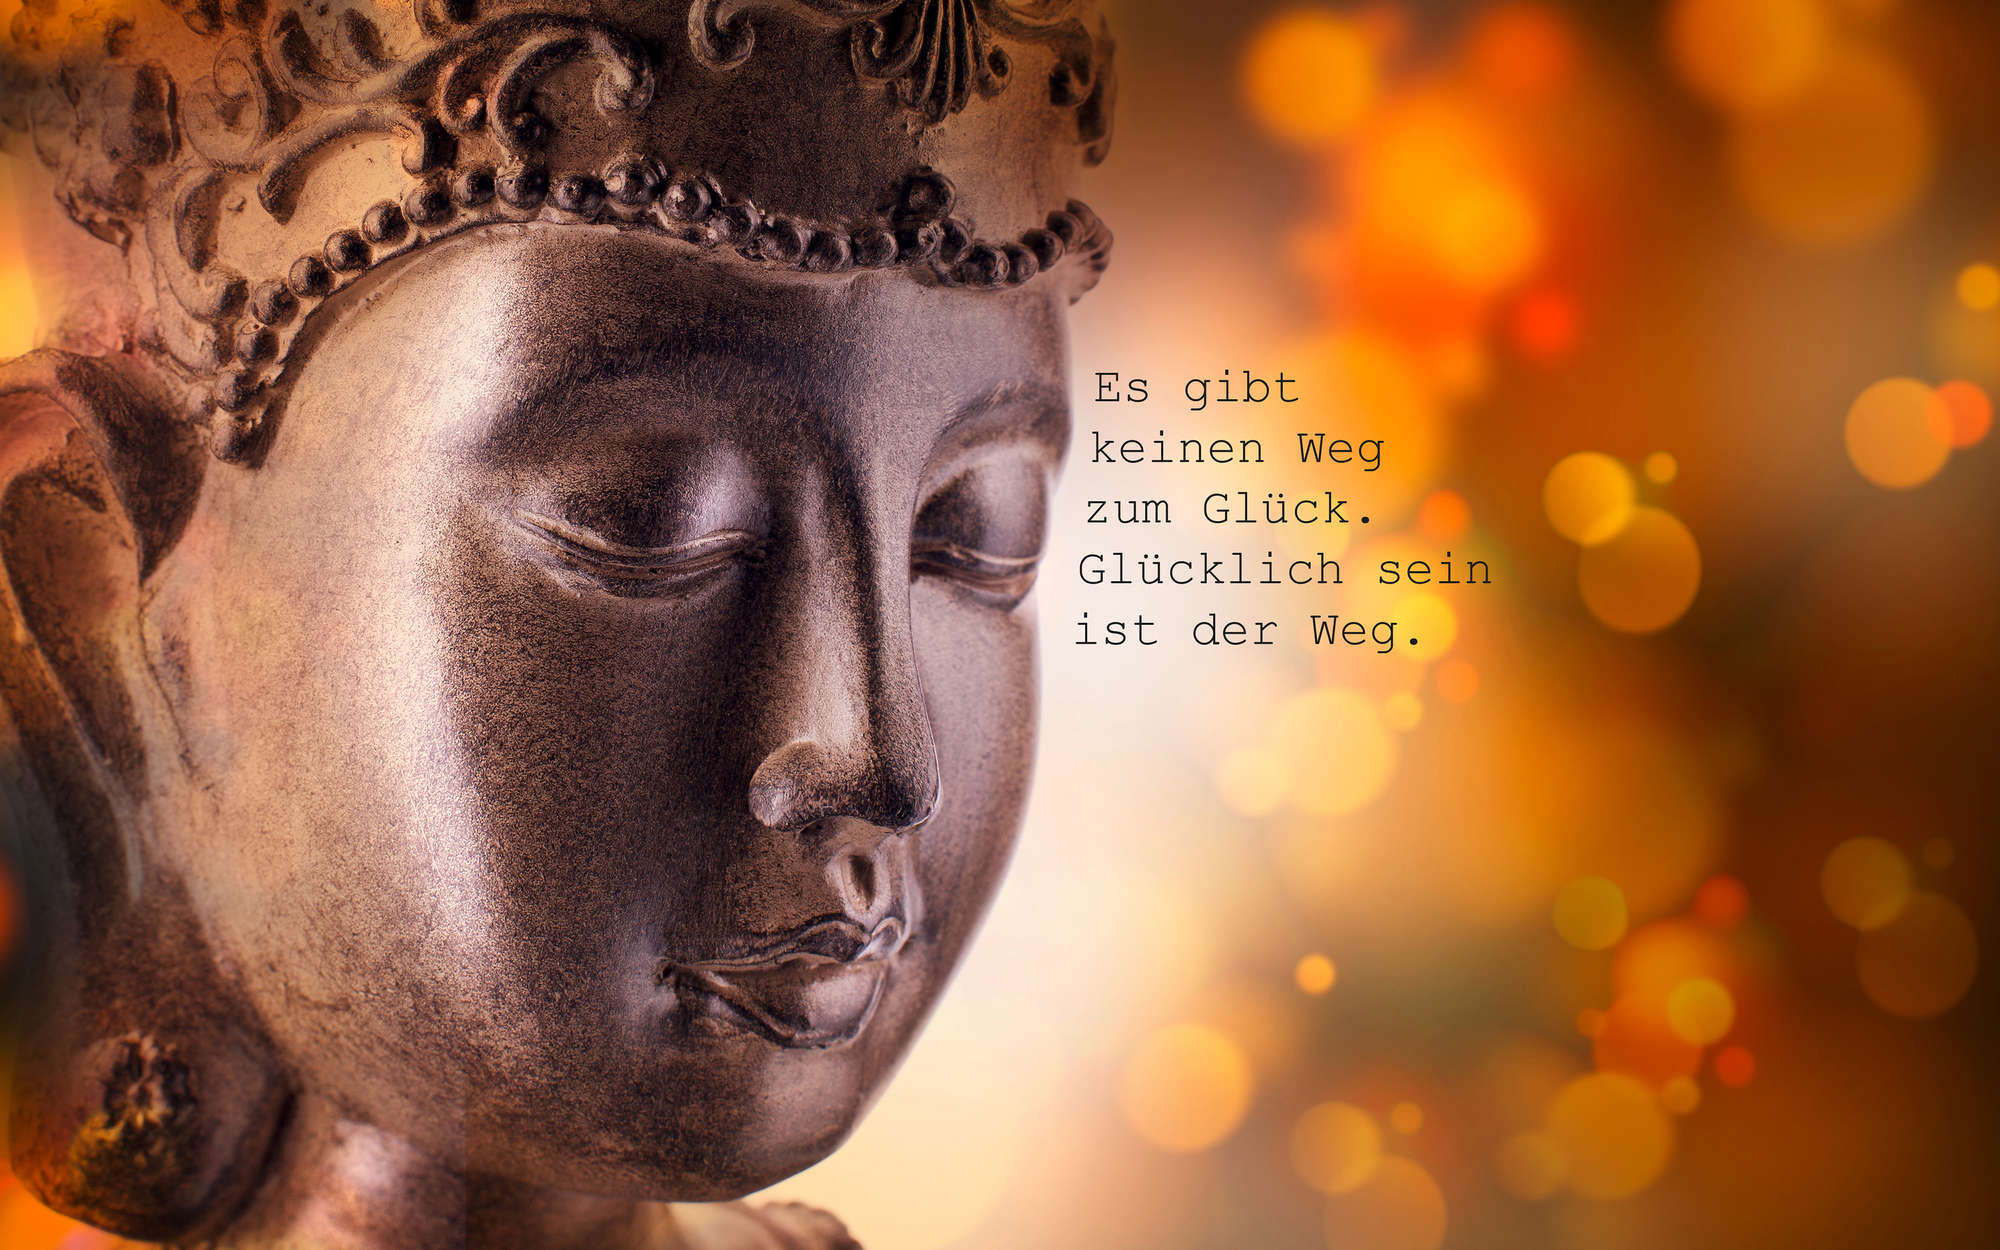             Fototapete Buddha mit Glück-Schriftzug – Mattes Glattvlies
        